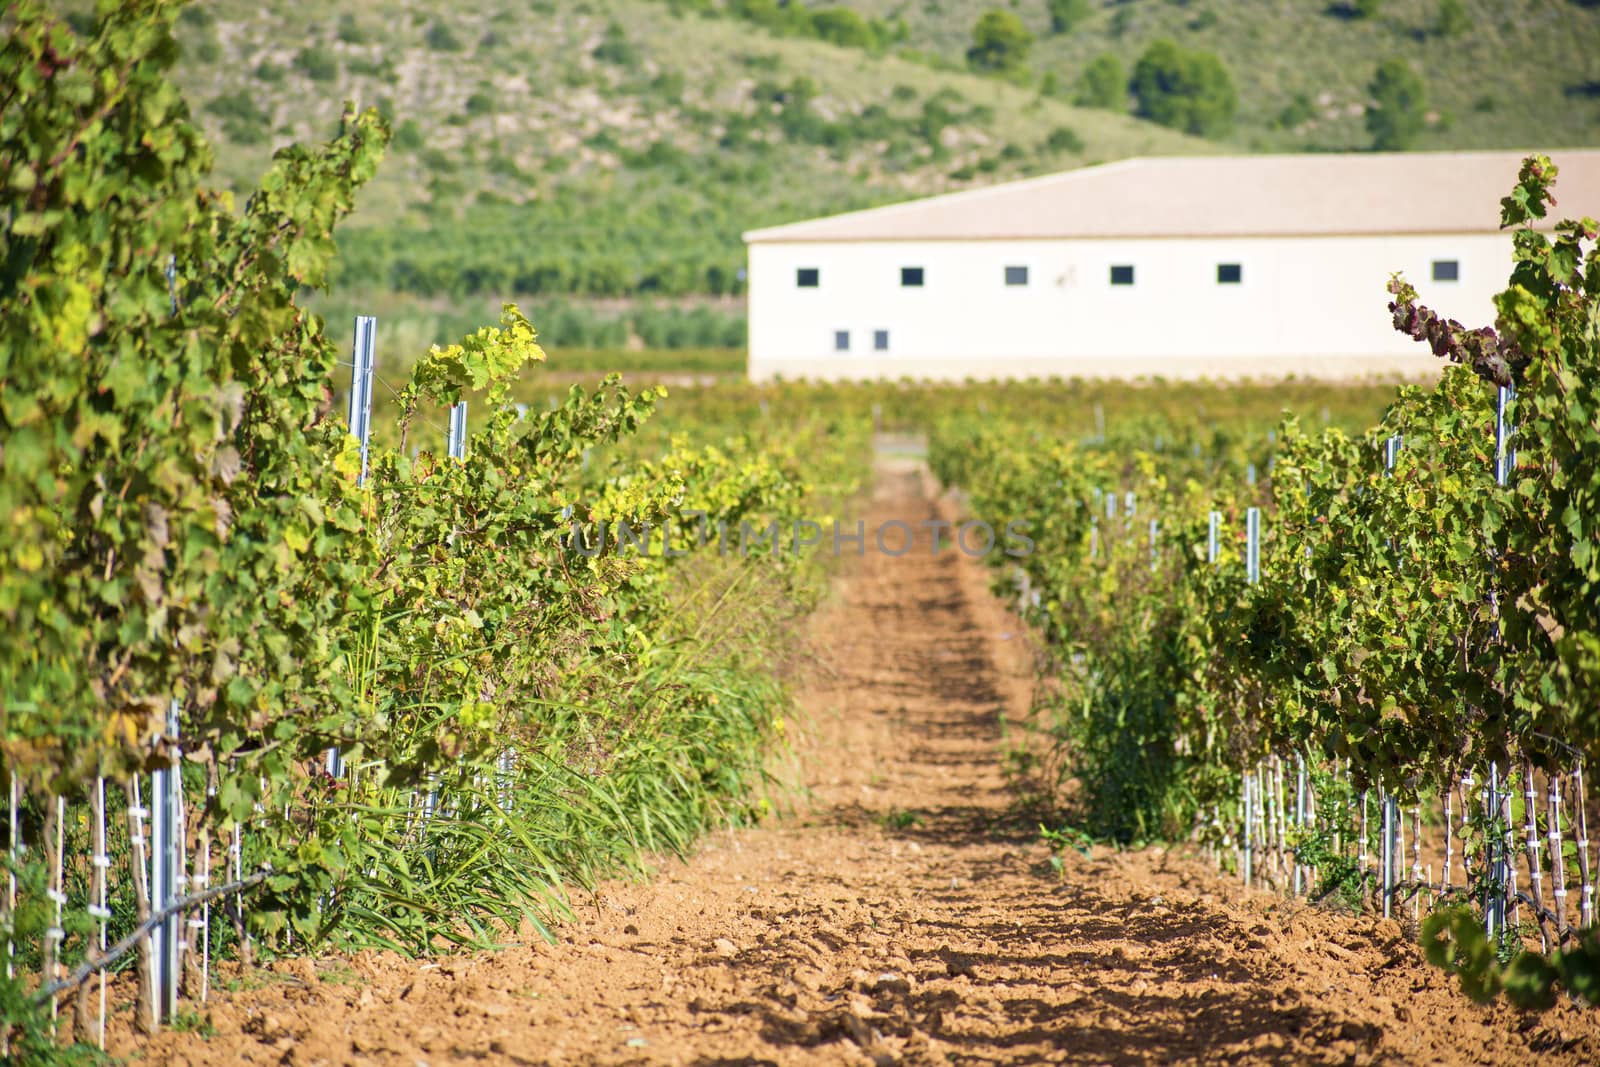 Vines plantation in Castilla la mancha, Spain, 2019. Vineyard perspective in agricultural field. Wind moving vine leaves. by worledit